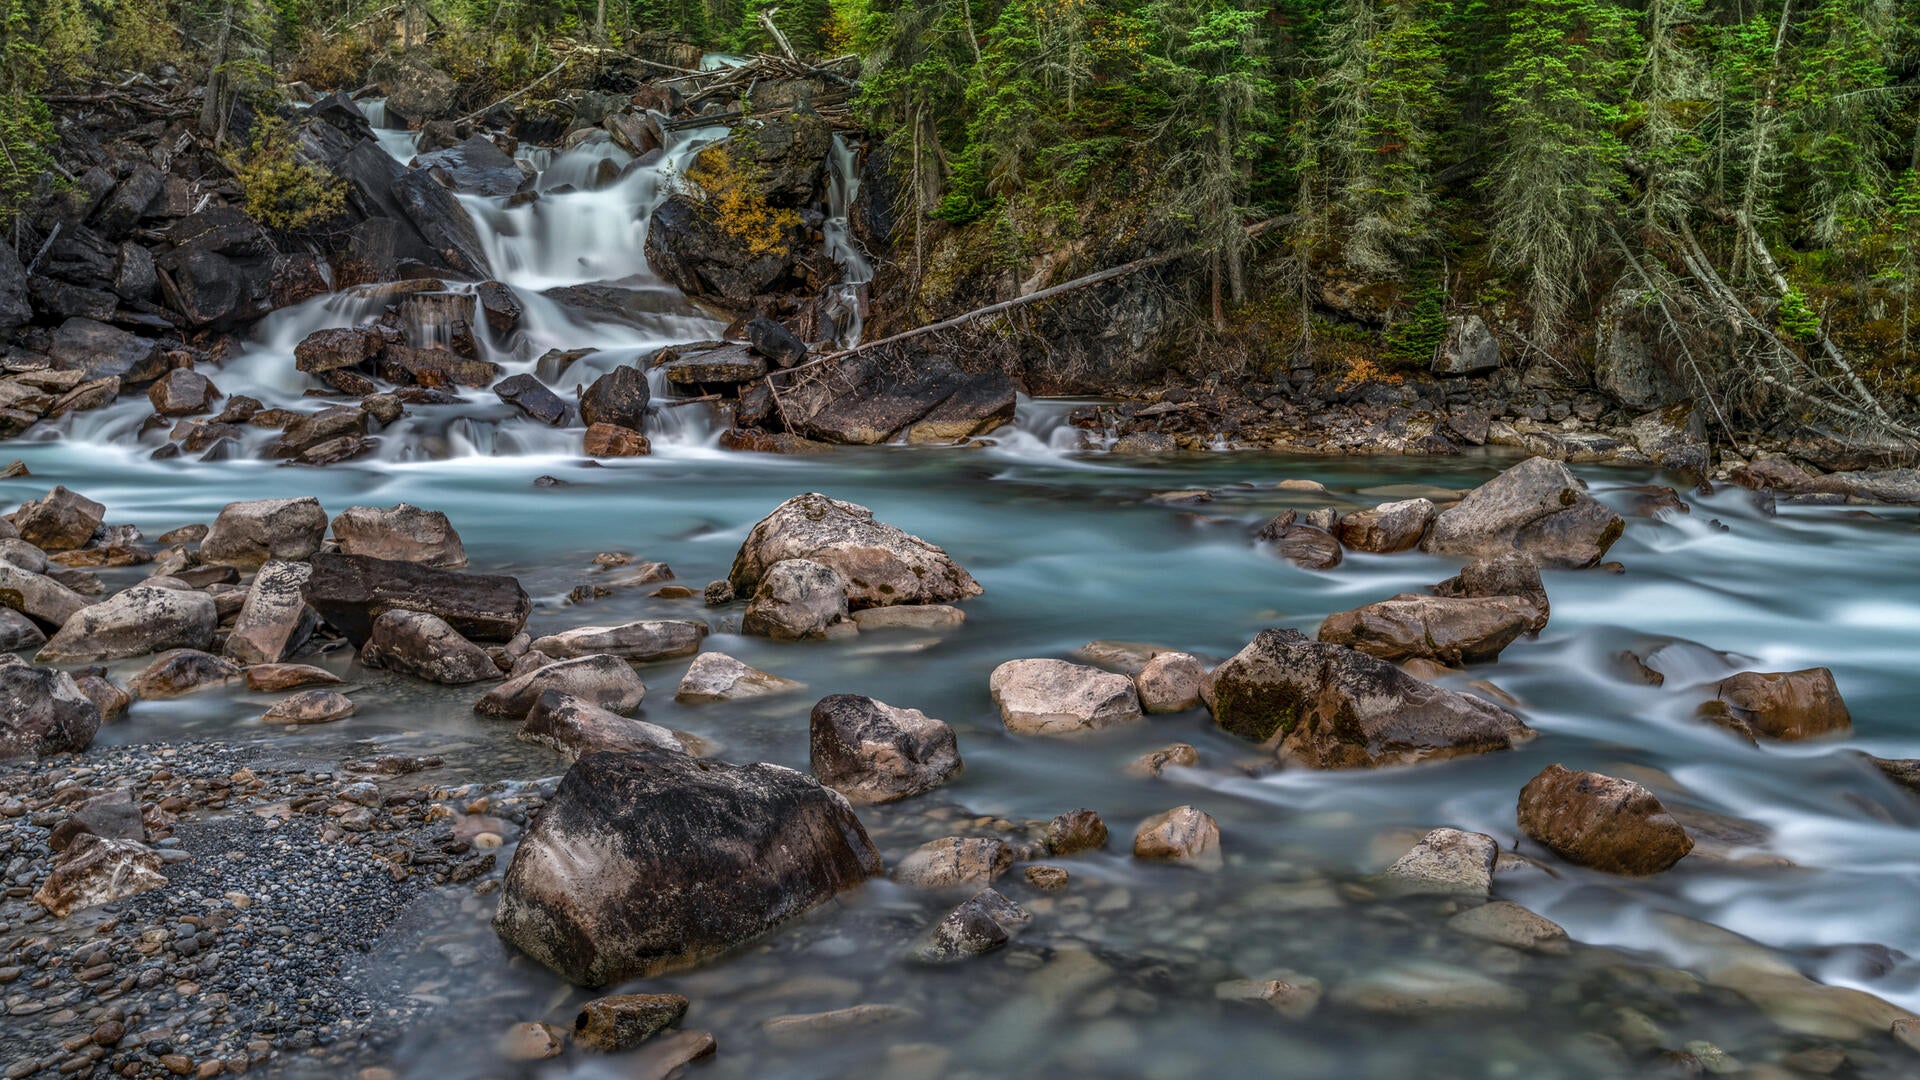 Stream flowing through rocks in a forest